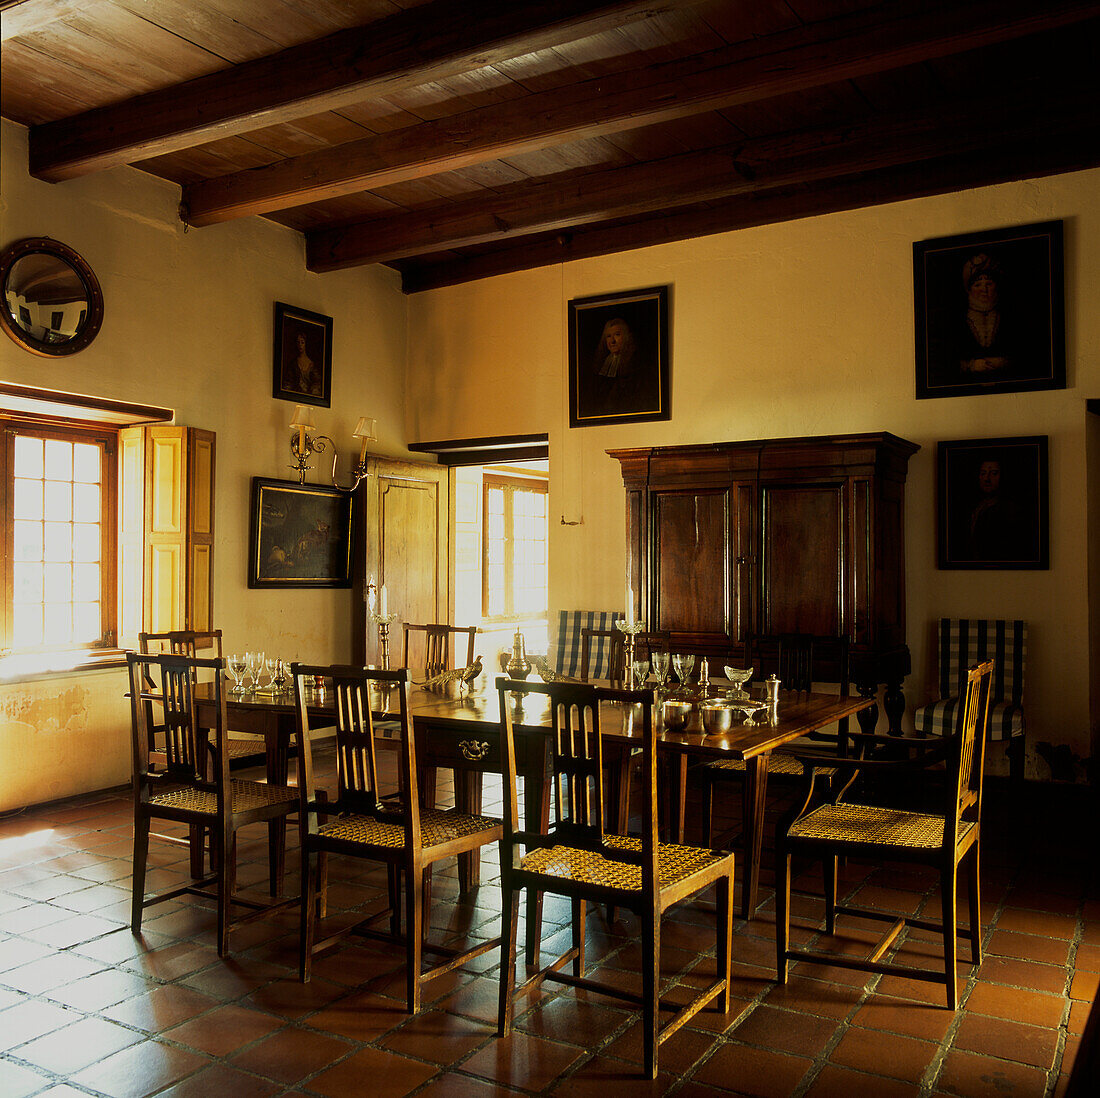 Cape Dutch dining room